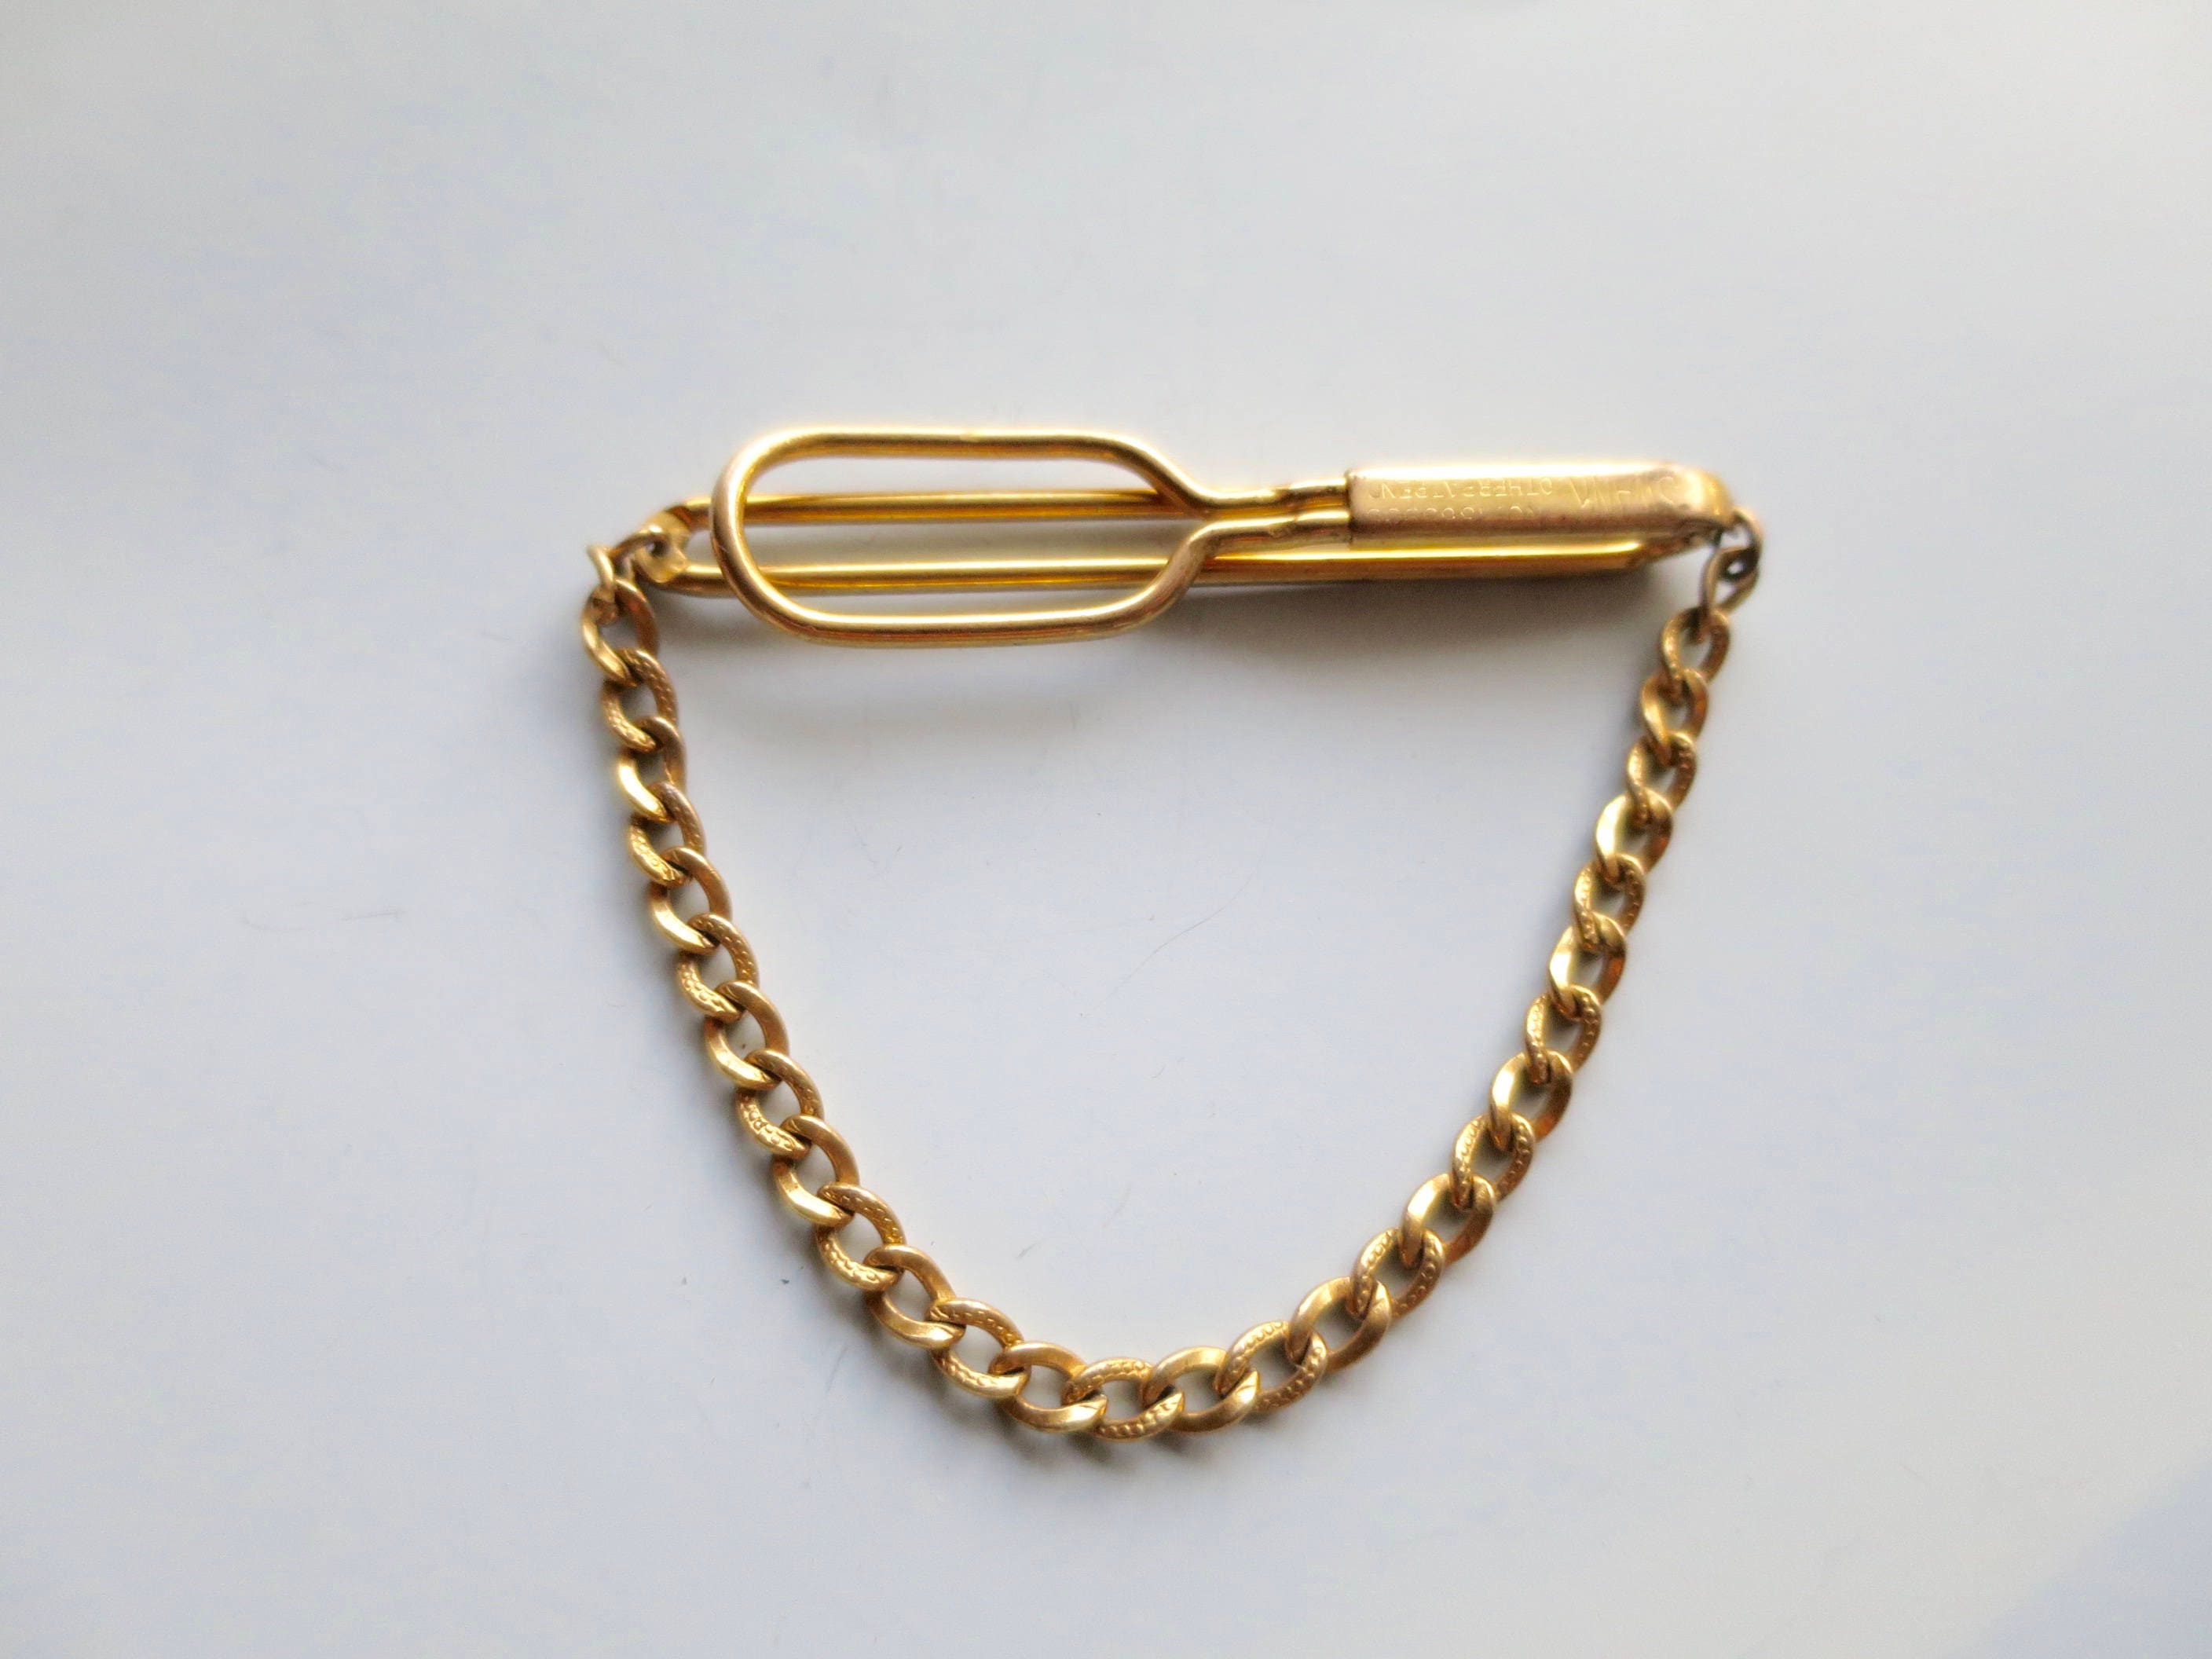 Swank Tie Clip Gold Finish Hanging Chain Vintage Art Deco Tie